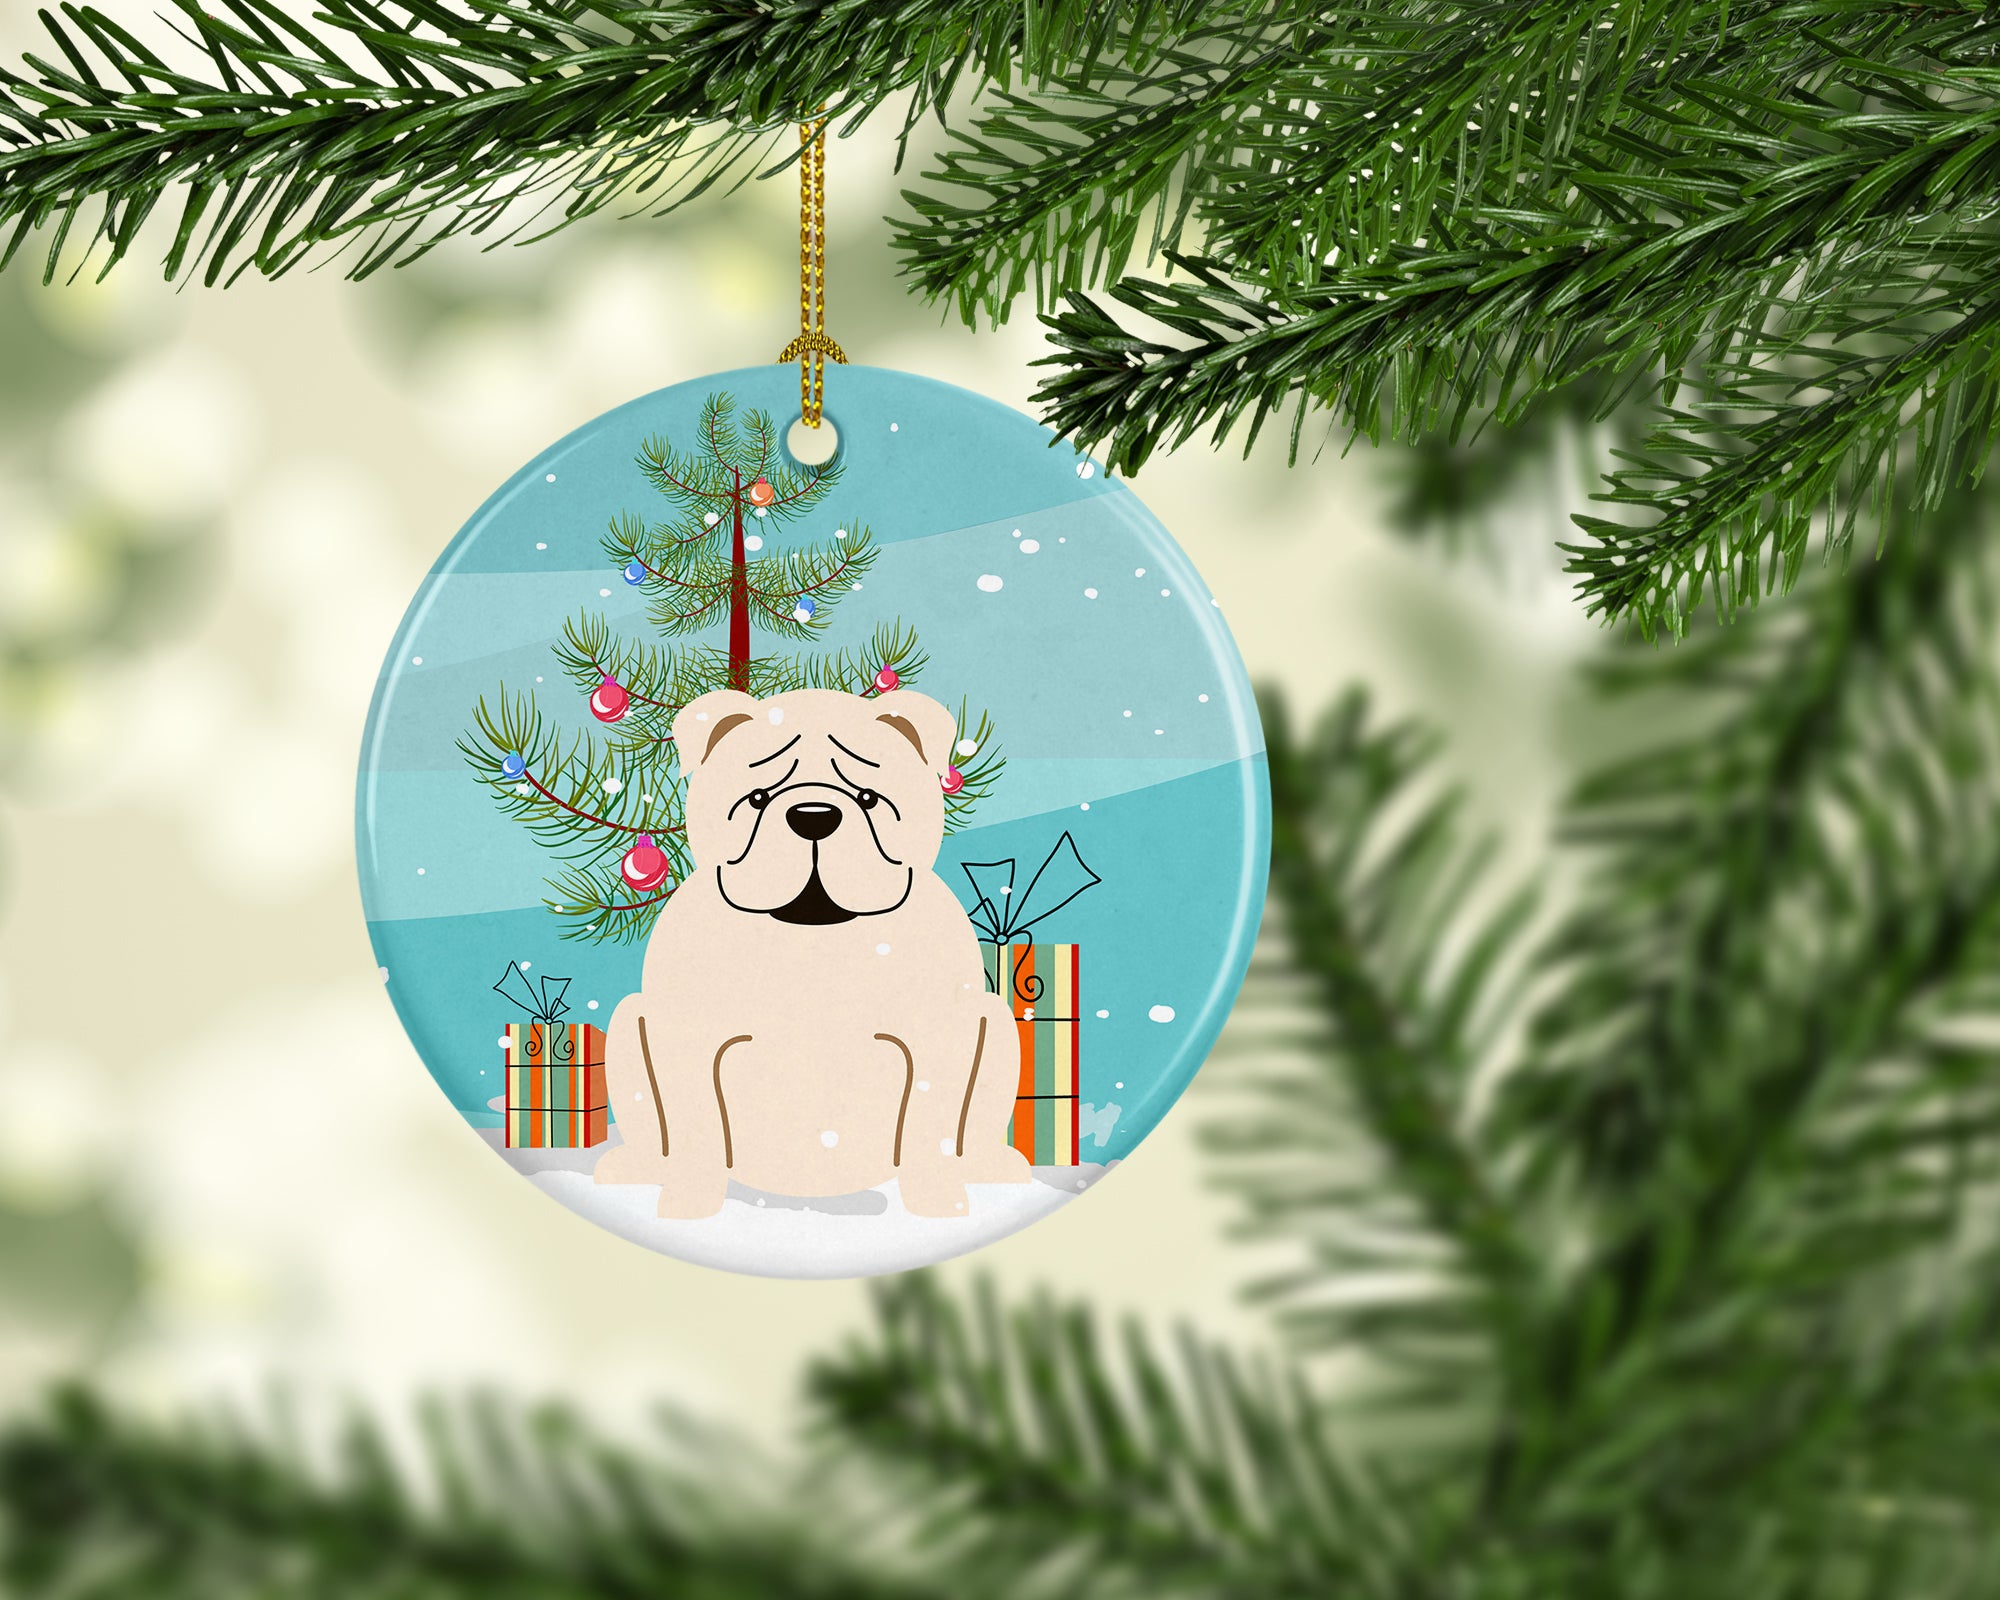 Merry Christmas Tree English Bulldog White Ceramic Ornament BB4248CO1 - the-store.com